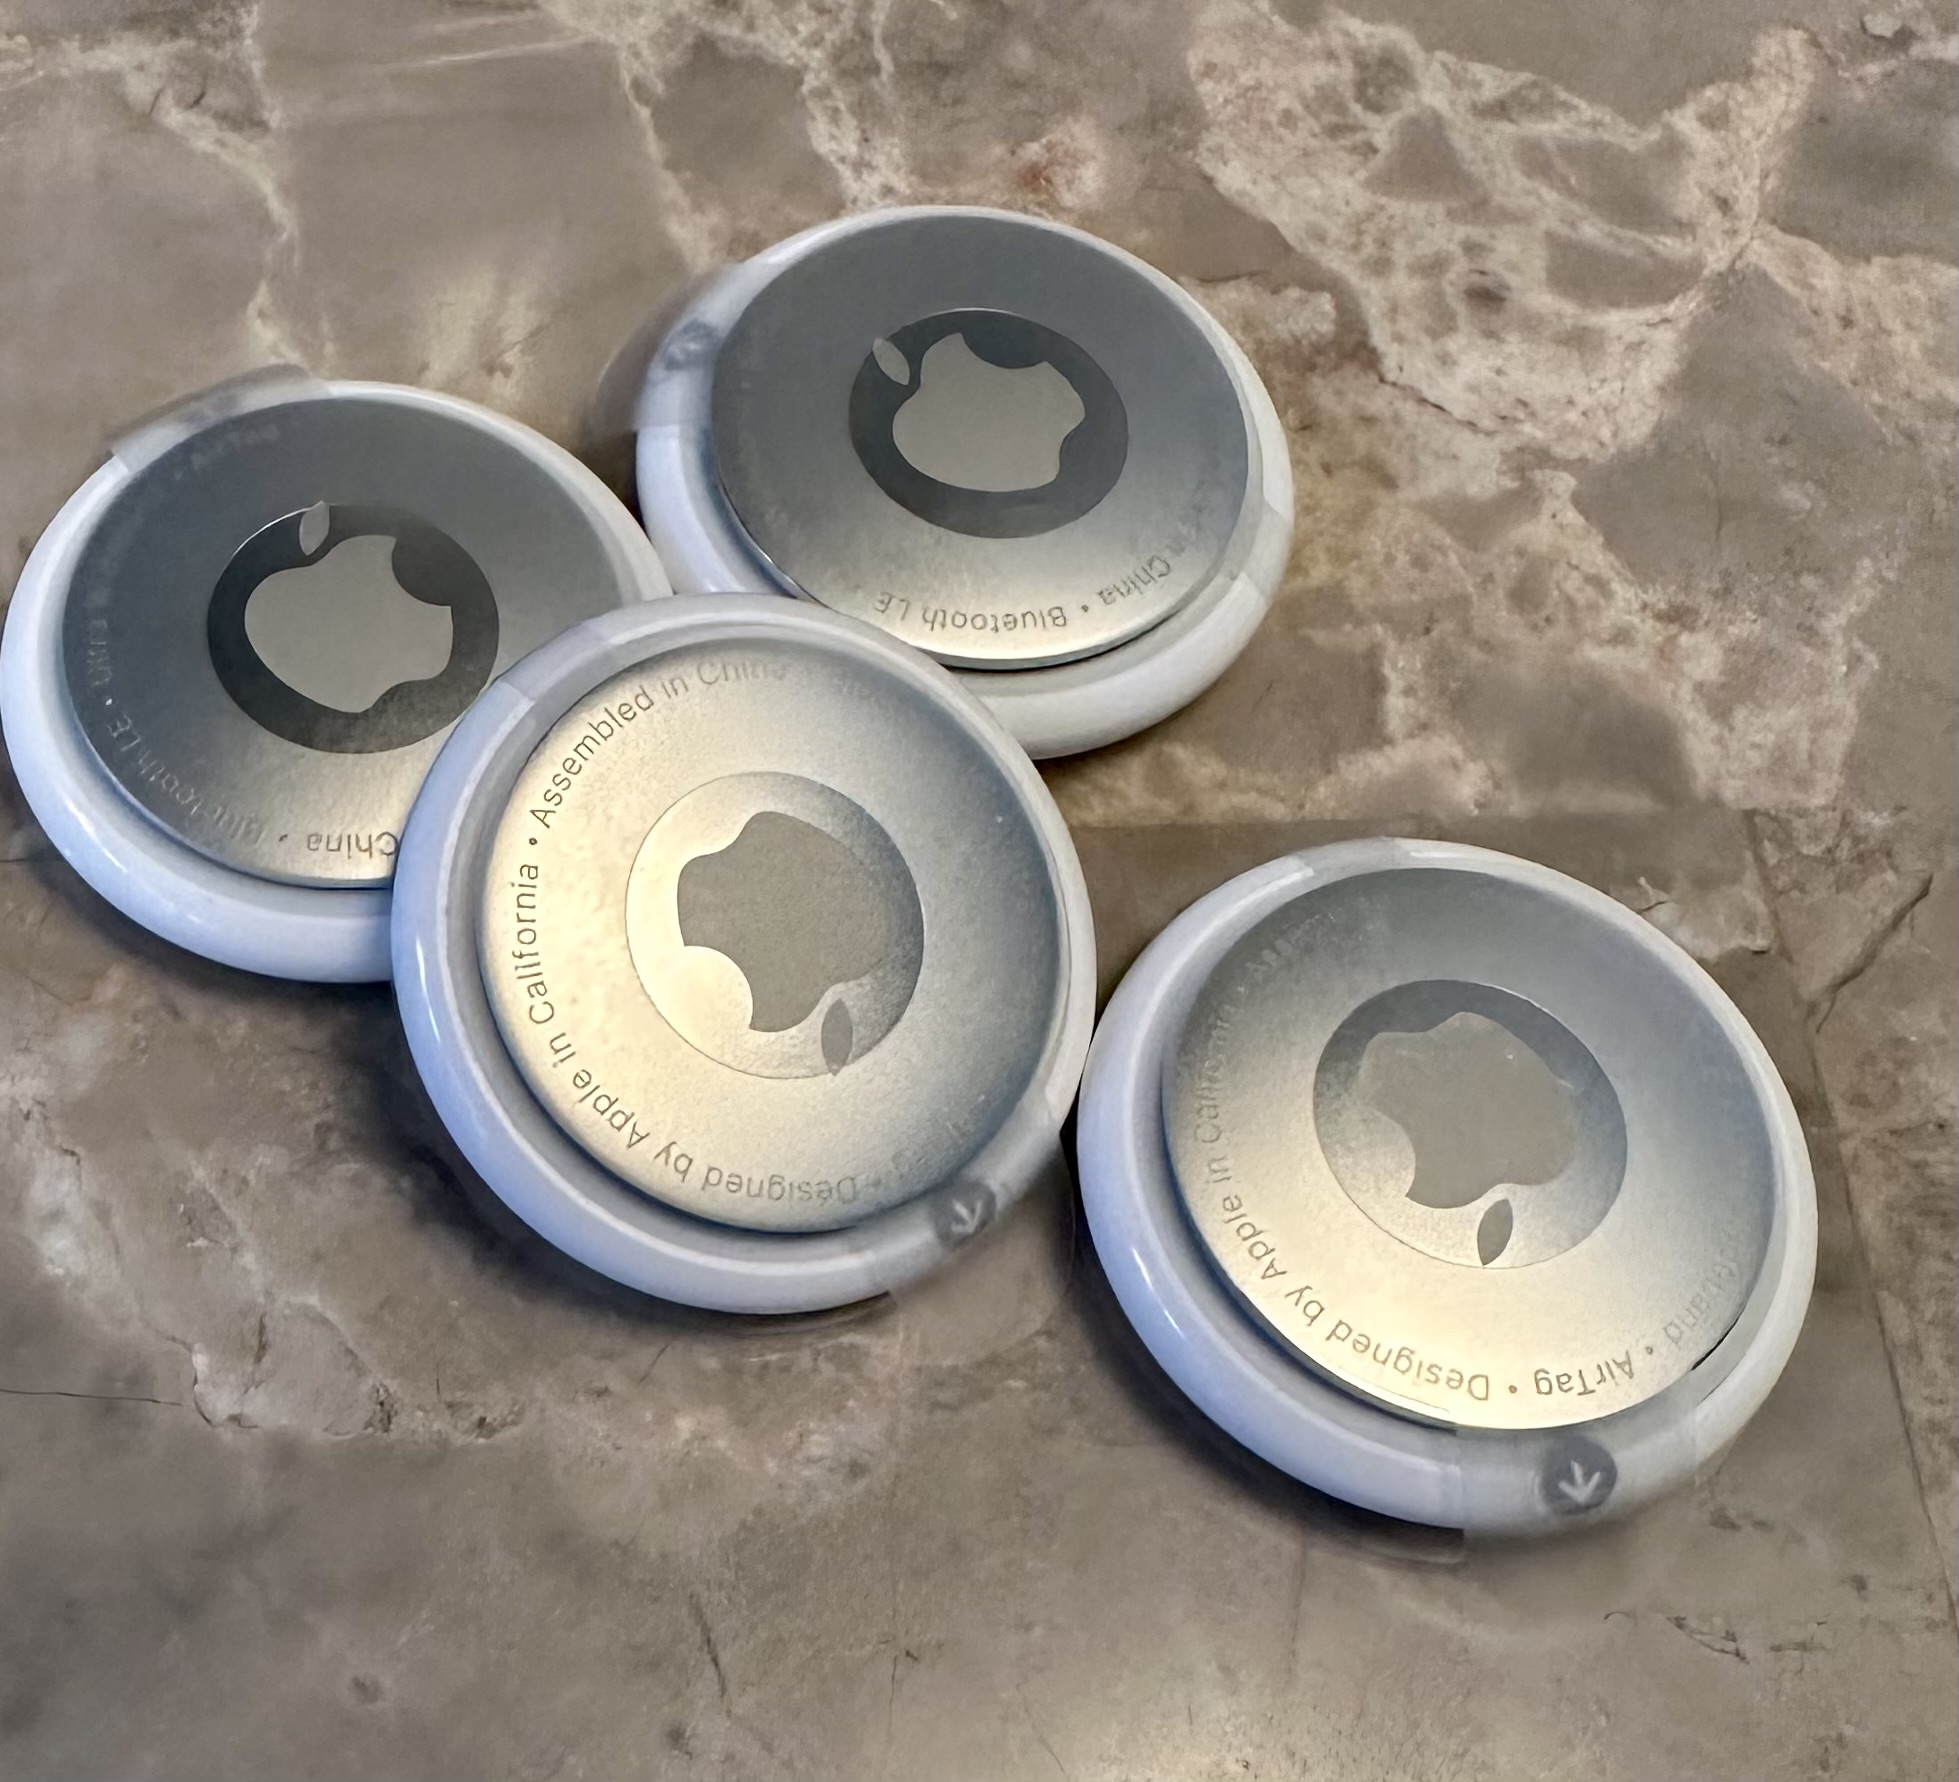 30+ Dumb / Creative Ways to use Apple's AirTags